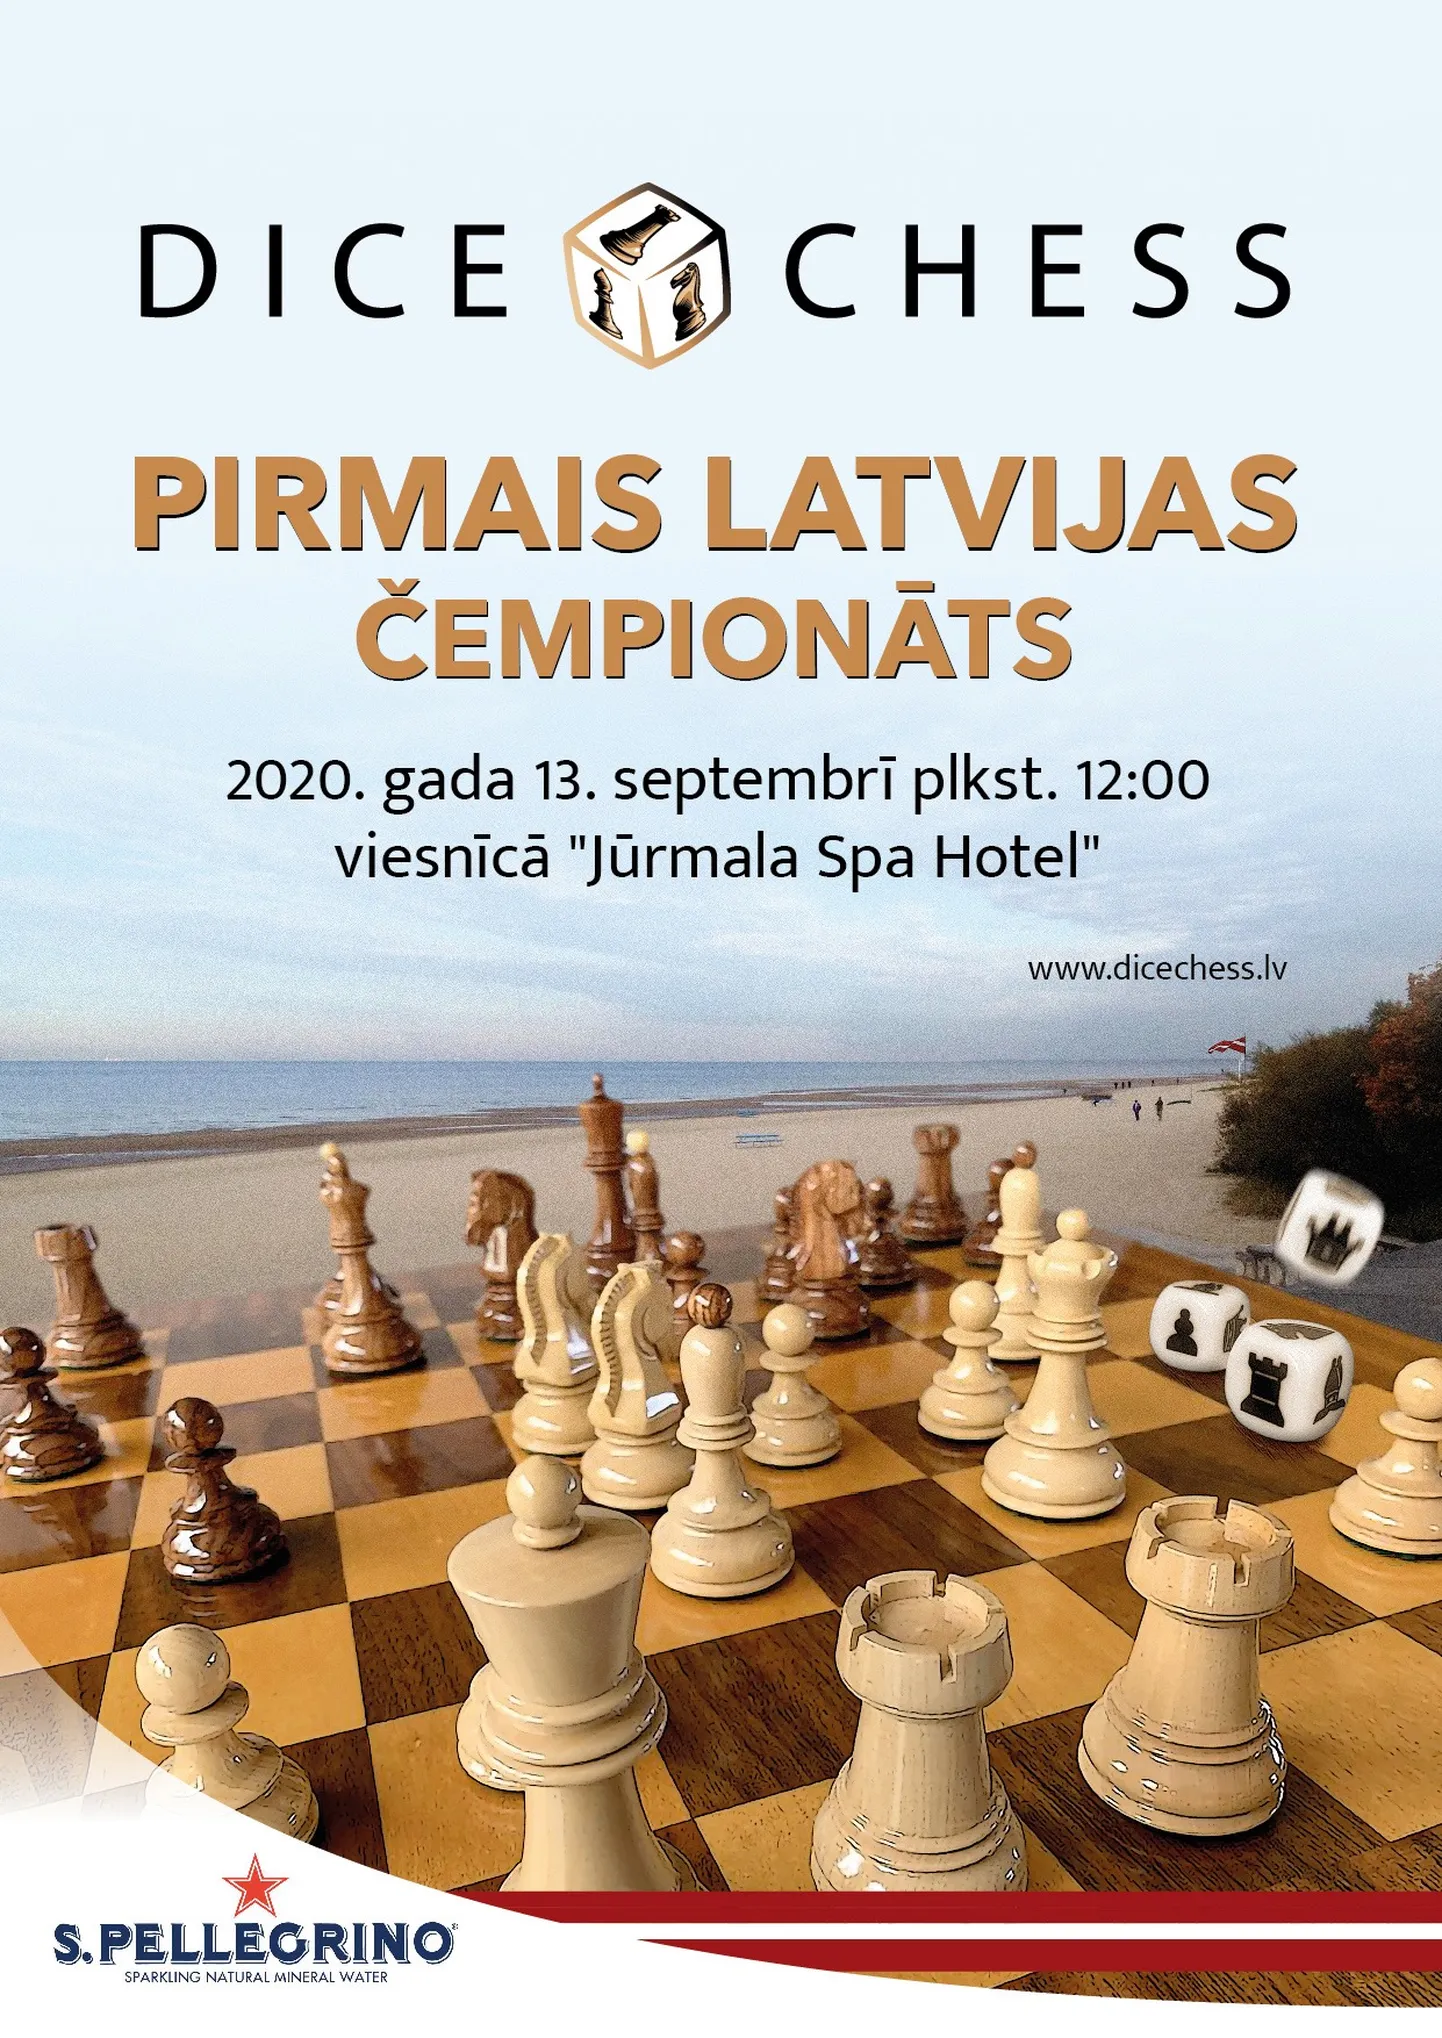 Pirmais "Dice chess" Latvijas čempionāts